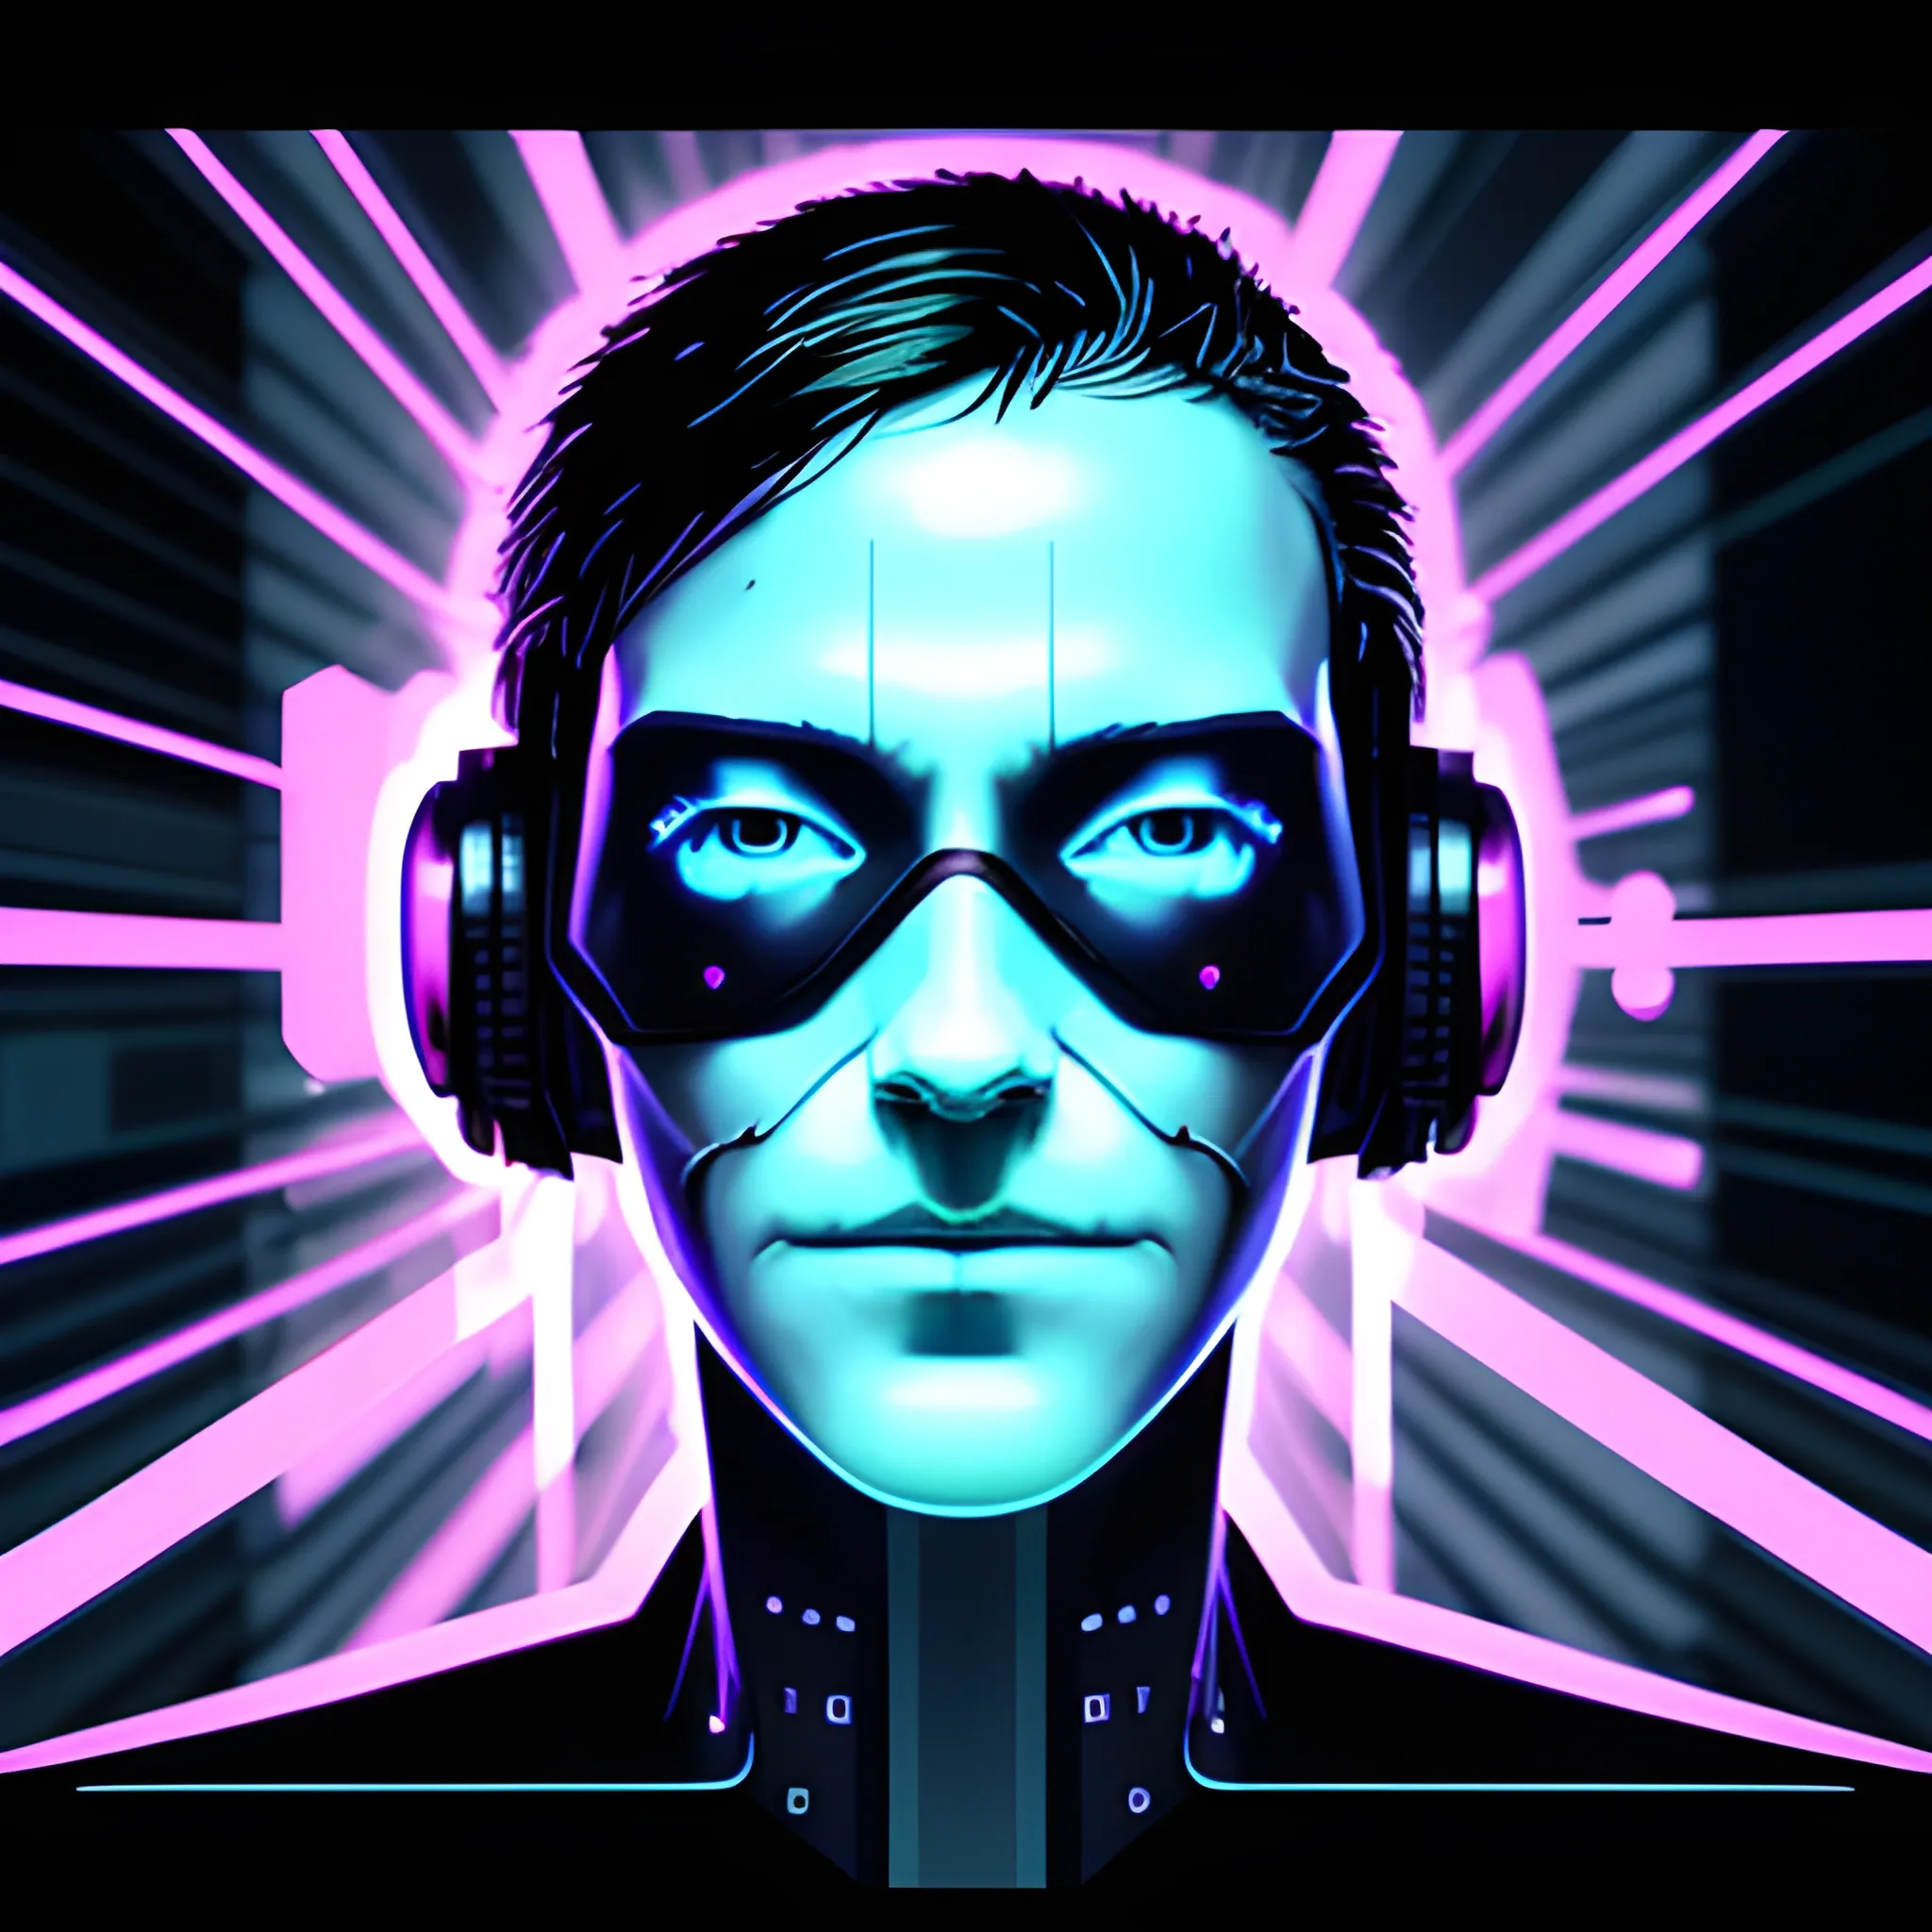 faceebook logo with cyberpunk style